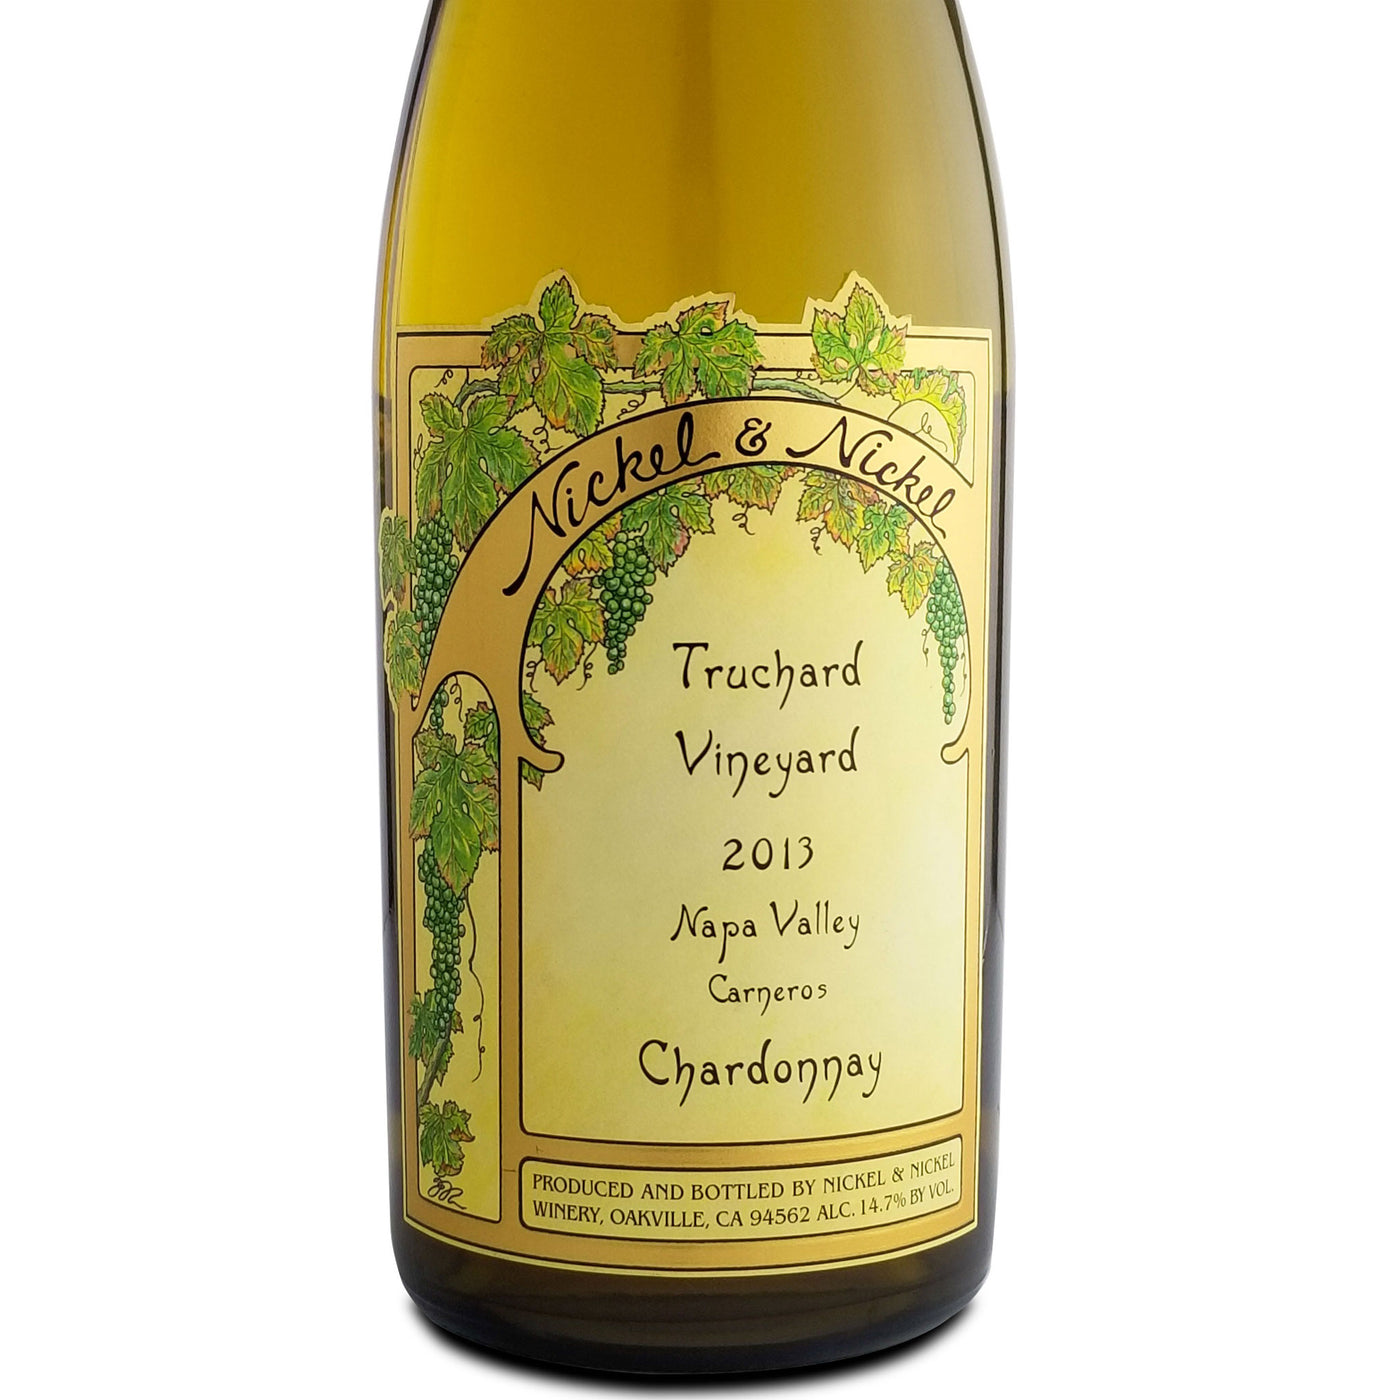 Nickel & Nickel Truchard Vineyard Chardonnay 2013